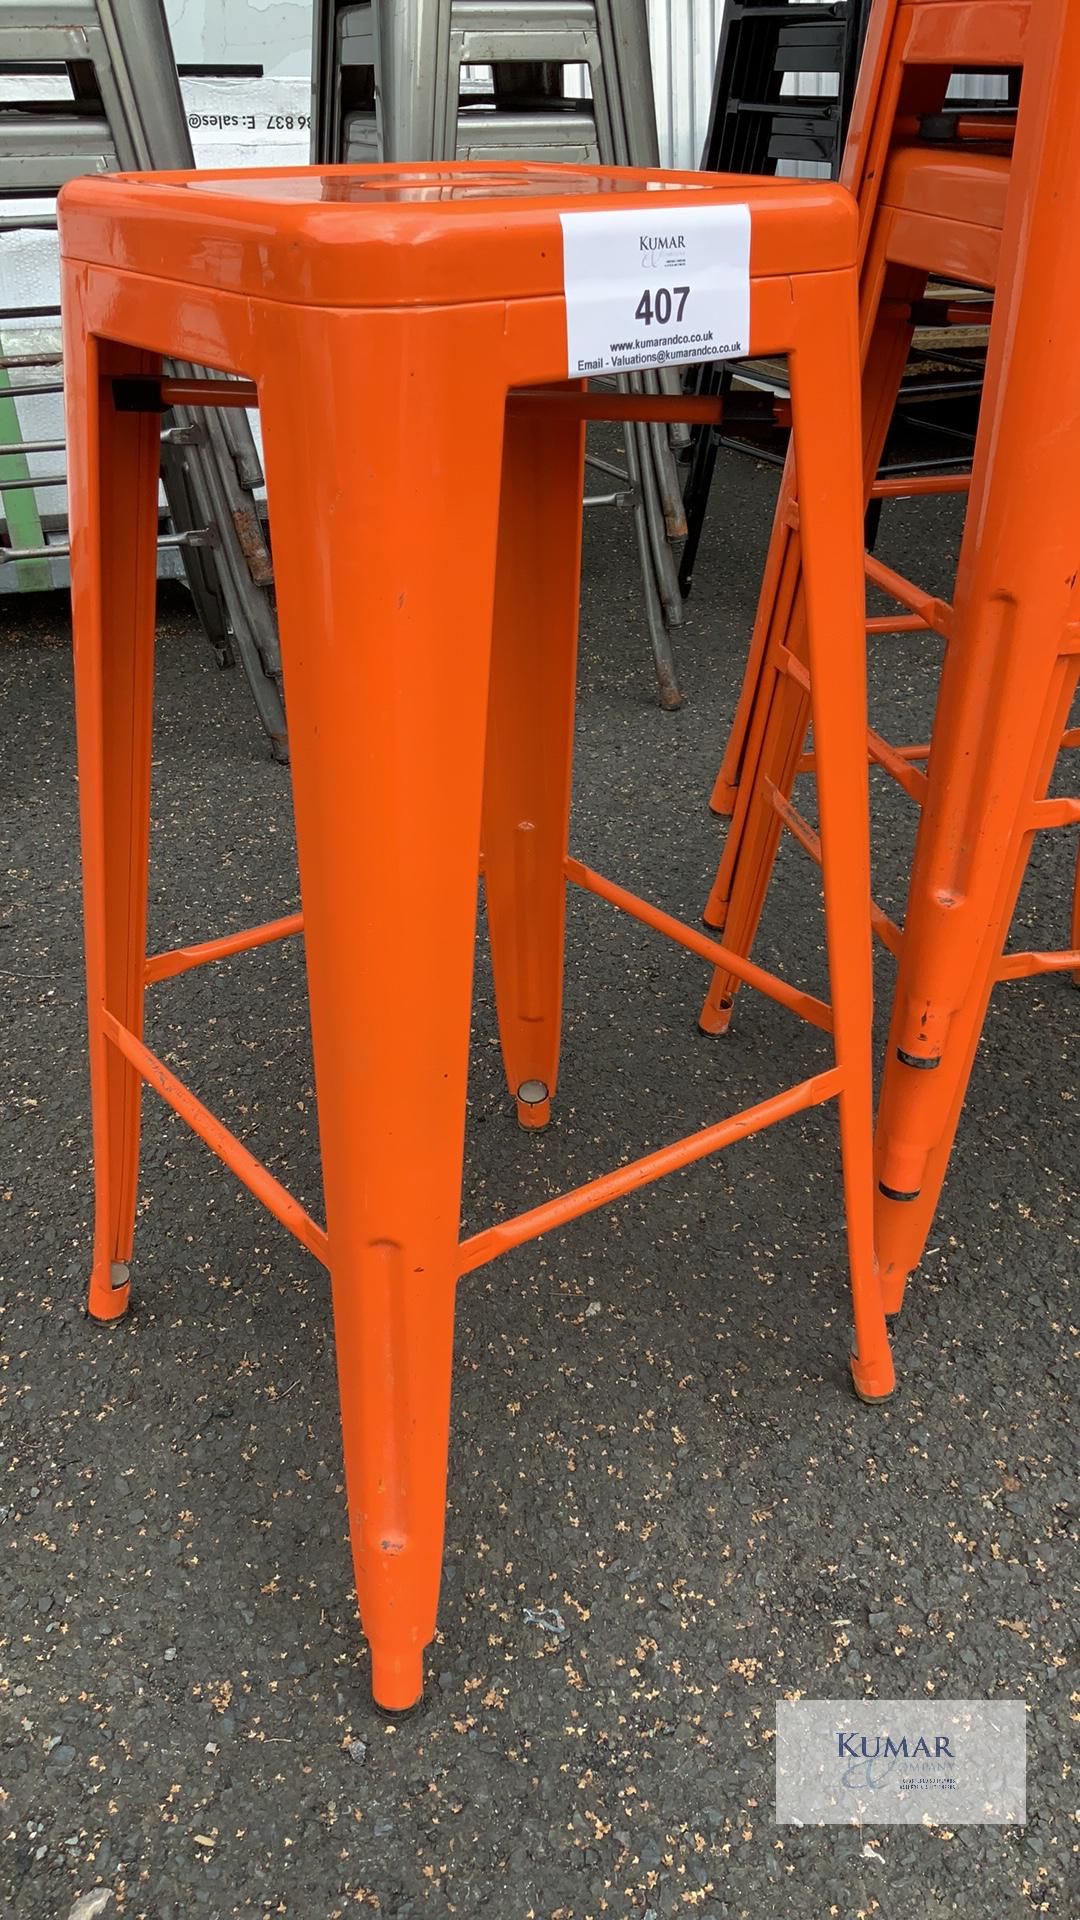 Set of 4 Callie backless metal bar stools in orange 765mm high - Image 2 of 3